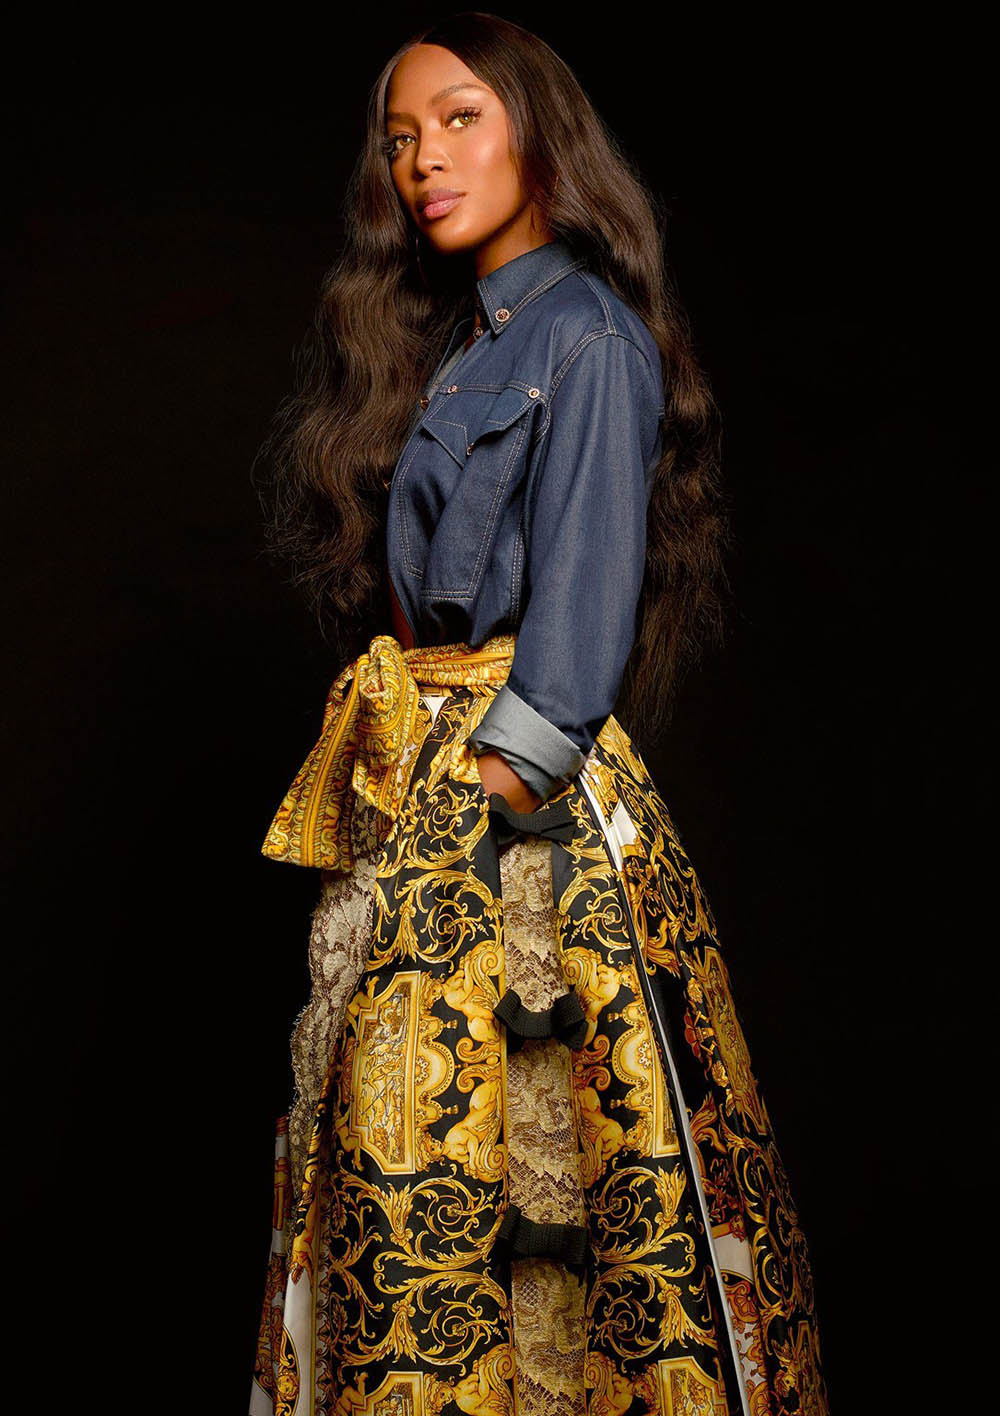 Naomi Campbell covers S Moda January 2018 by Cuneyt Akeroglu